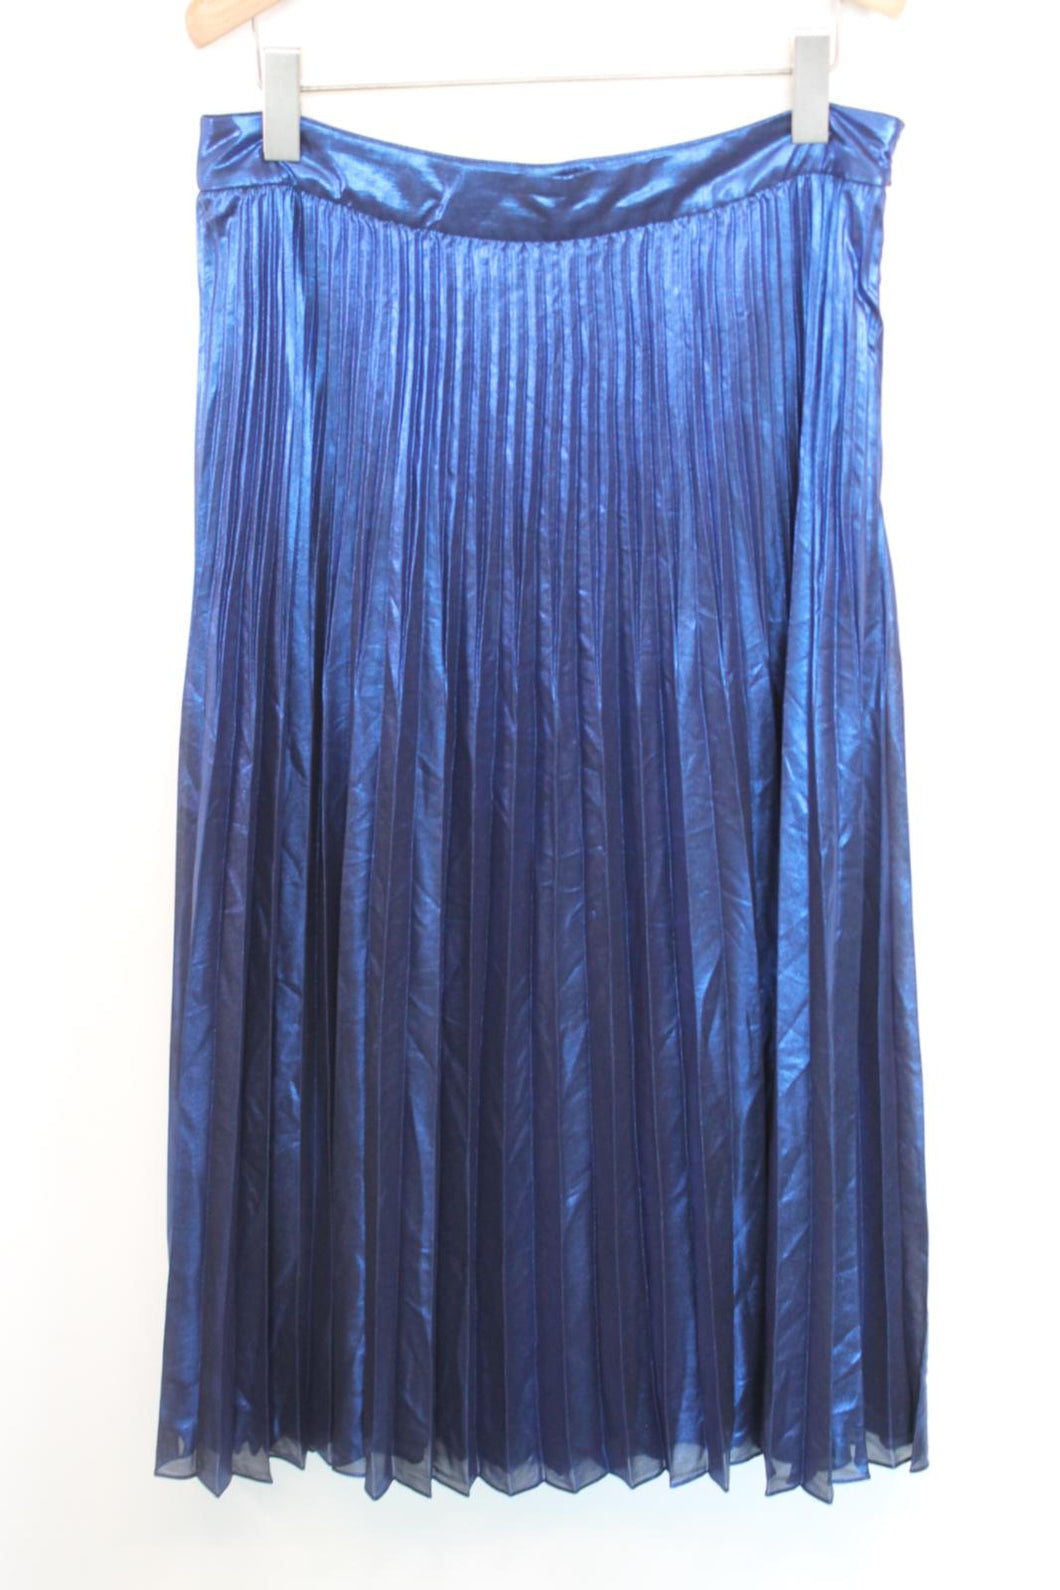 BODEN Ladies Blue Satin Long Pleated Skirt EU42 UK14 BNWT